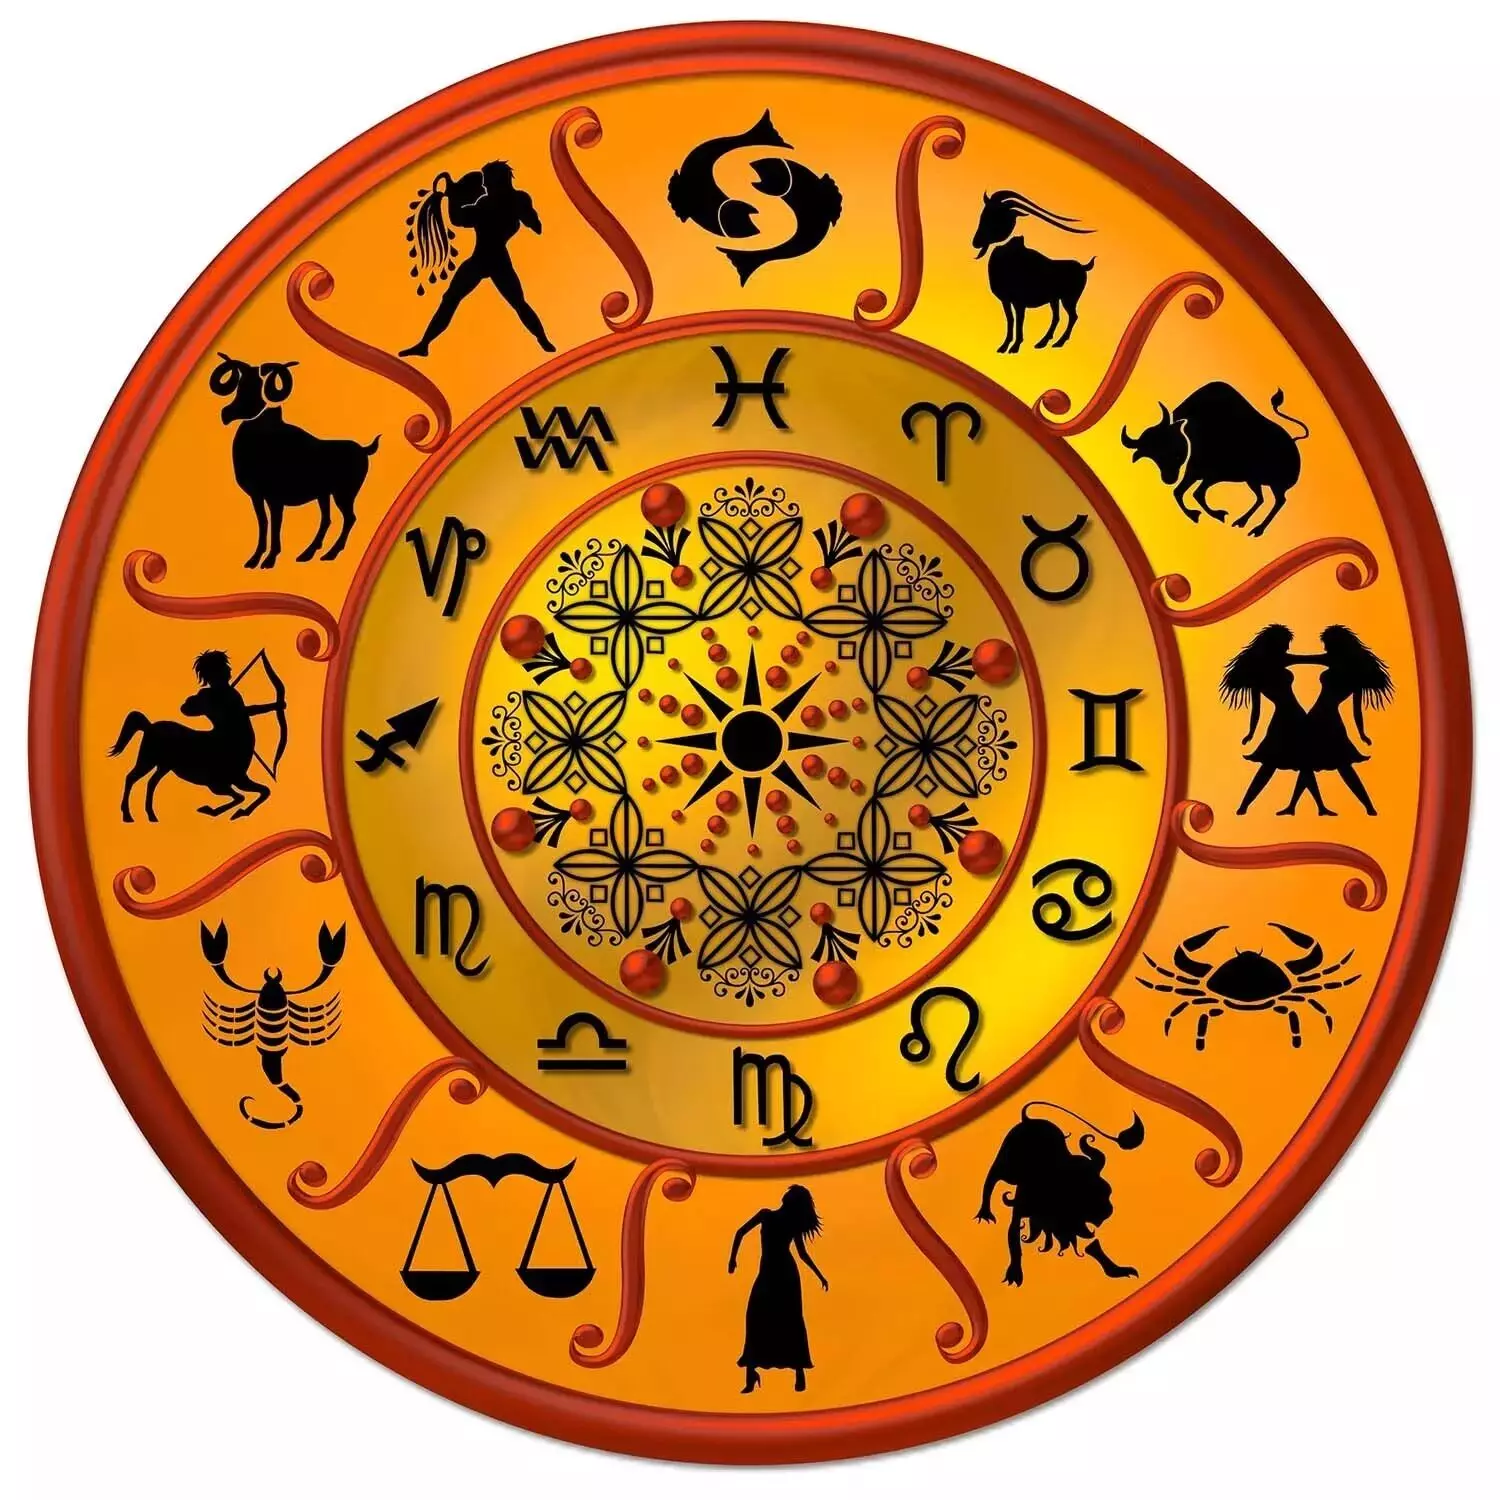 02  Novembar  – Know your todays horoscope